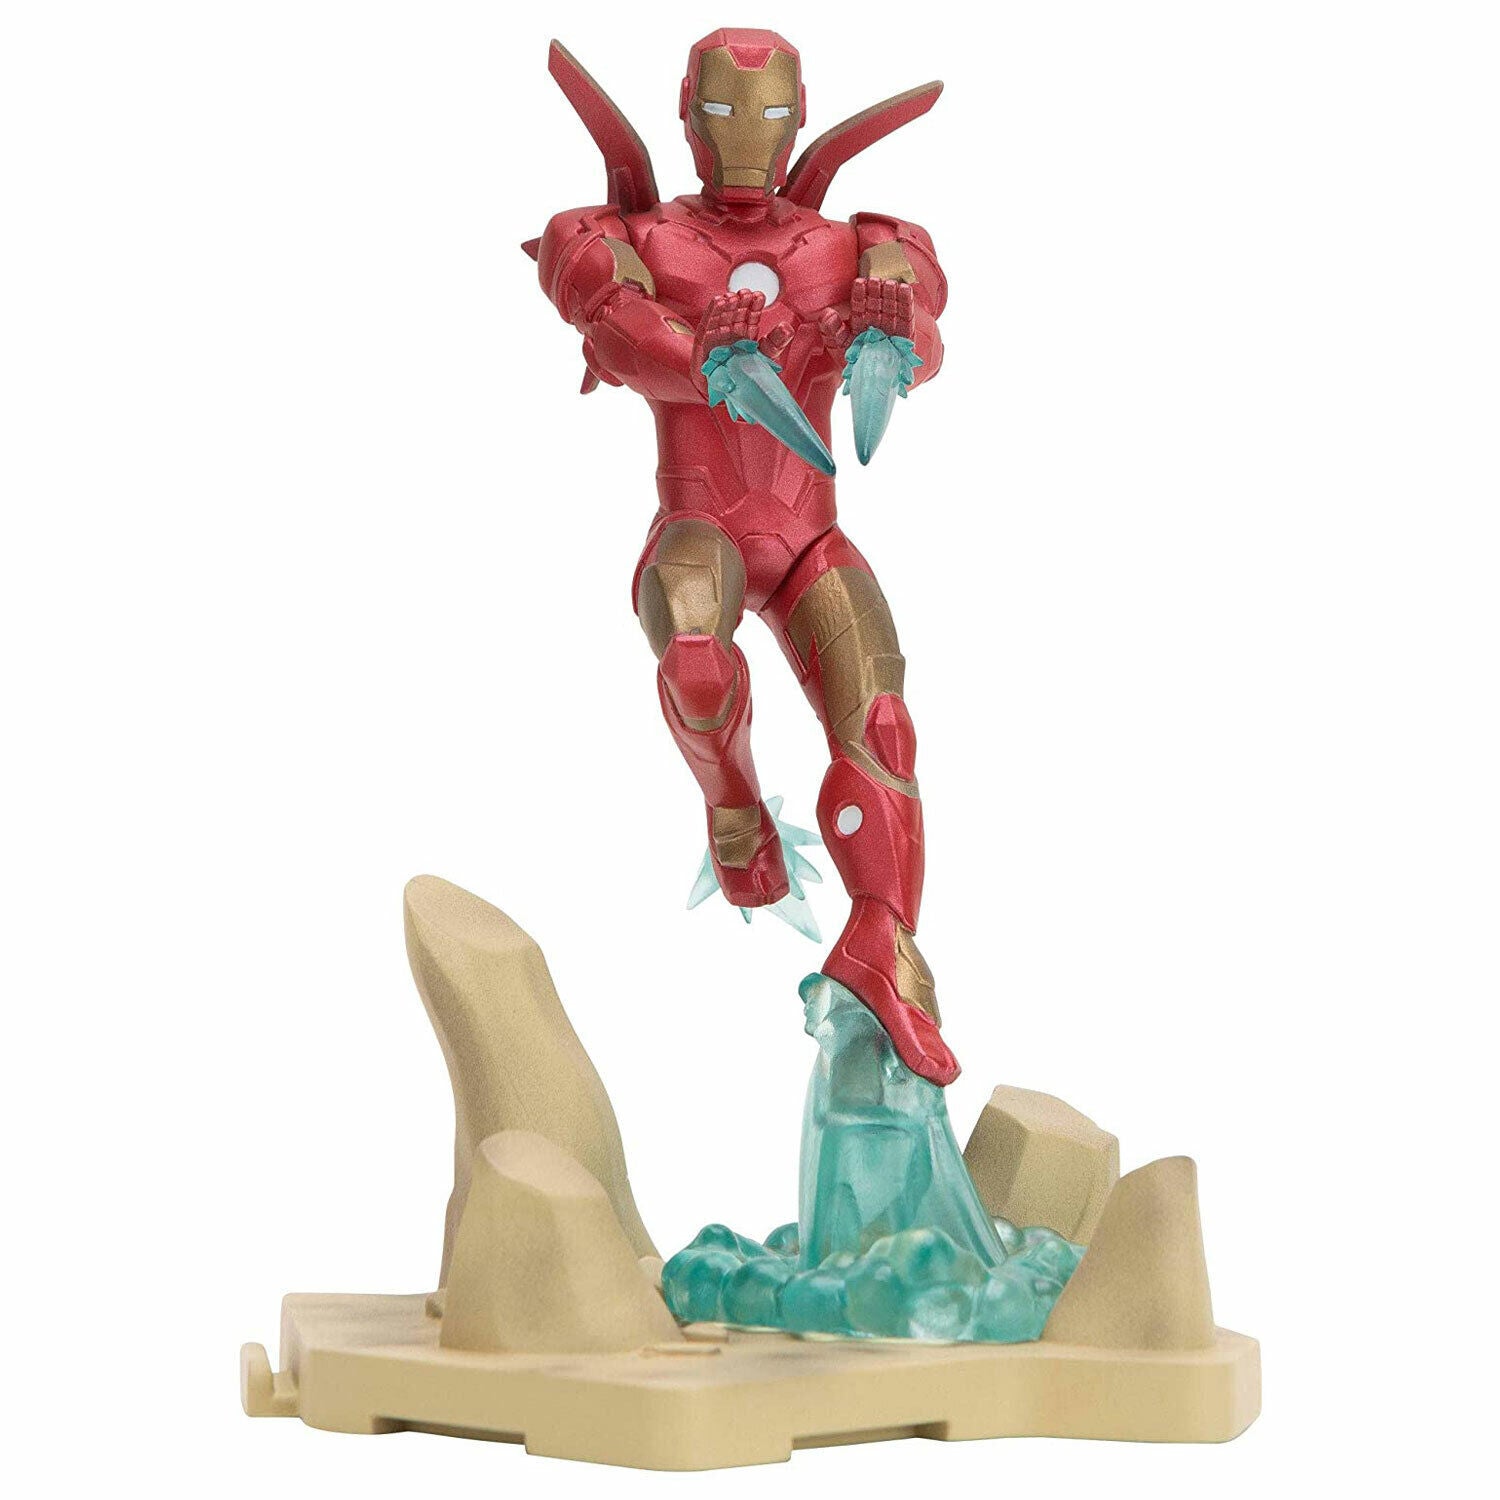 Zoteki Marvel Avengers Iron Man #004 Collectible Figure 4-Inch Series 1